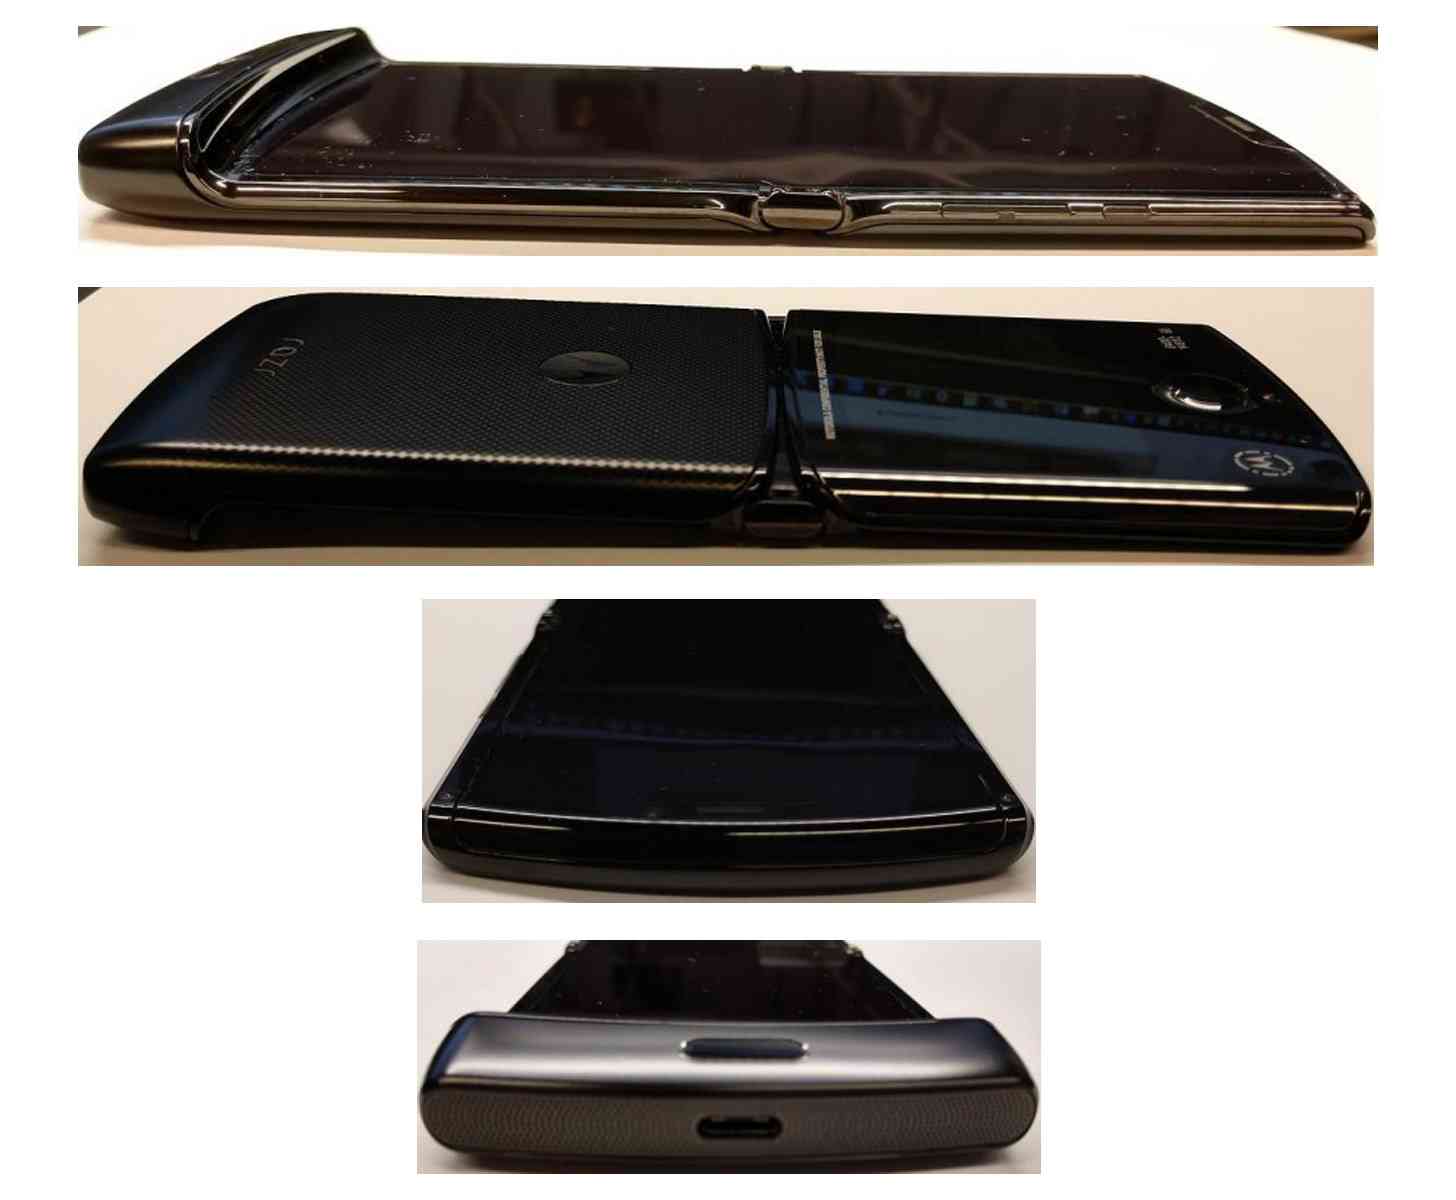 Motorola RAZR foldable sides FCC